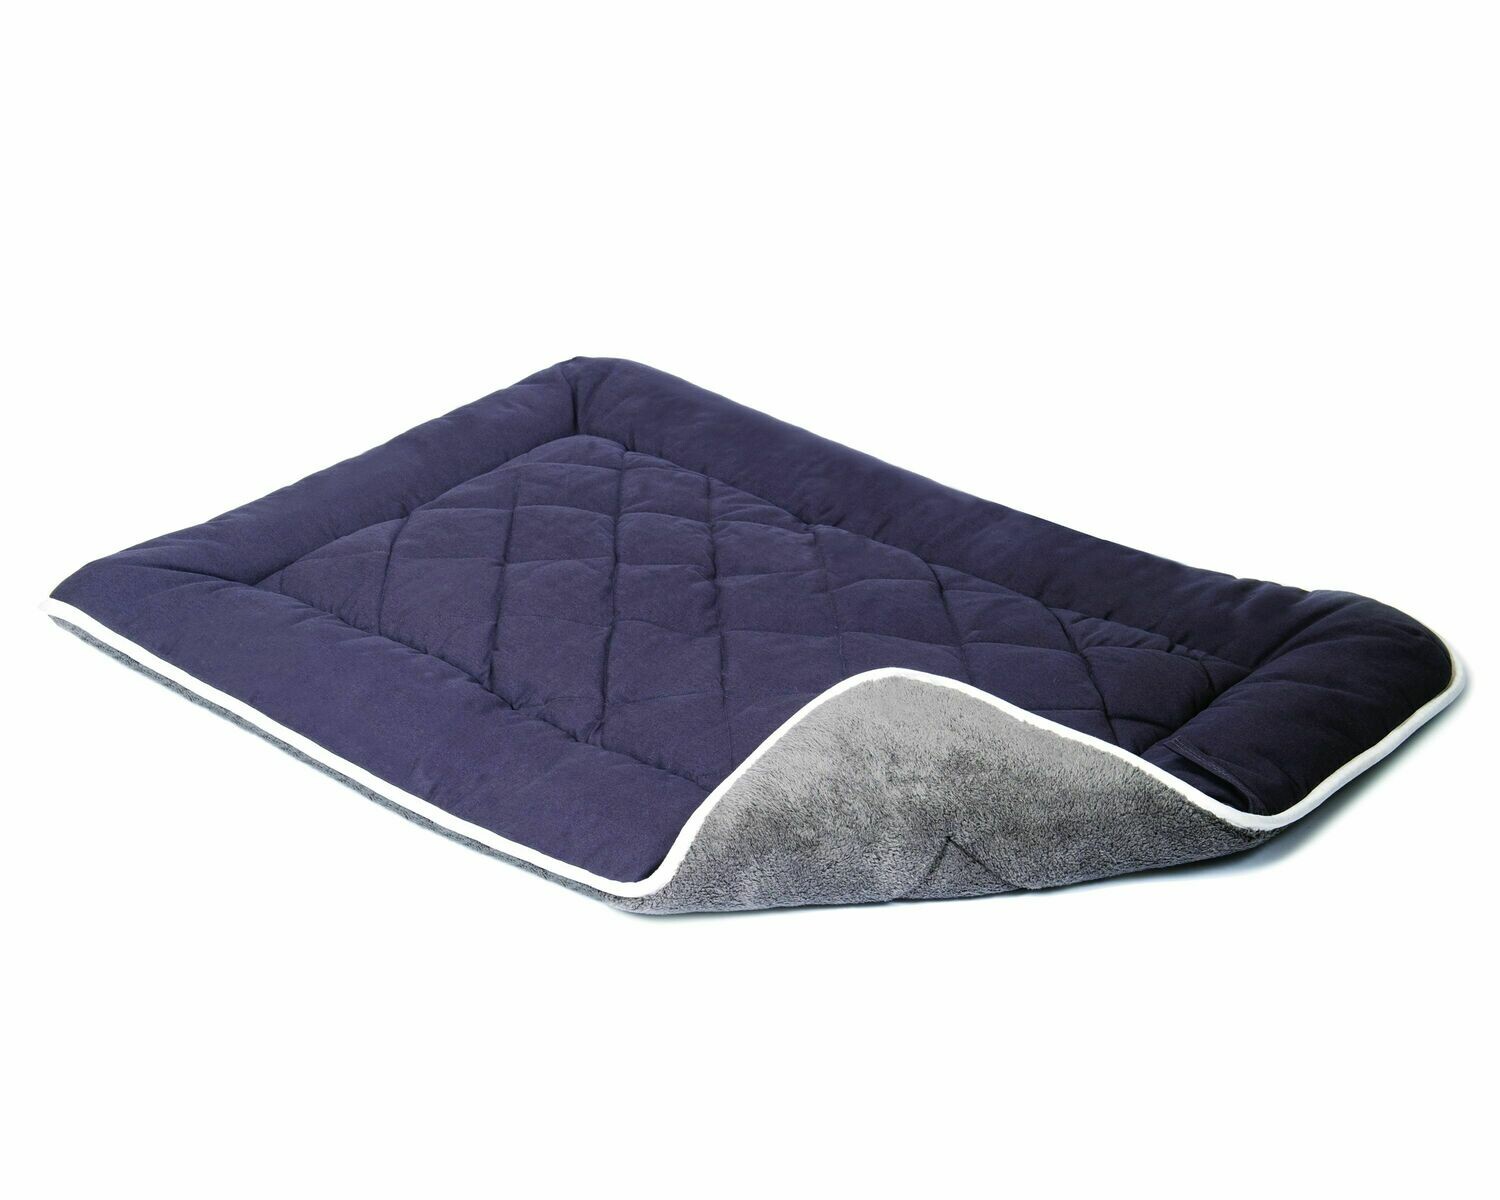 DGS Sleeper Cushion - Pebble Grey. (36" inch)